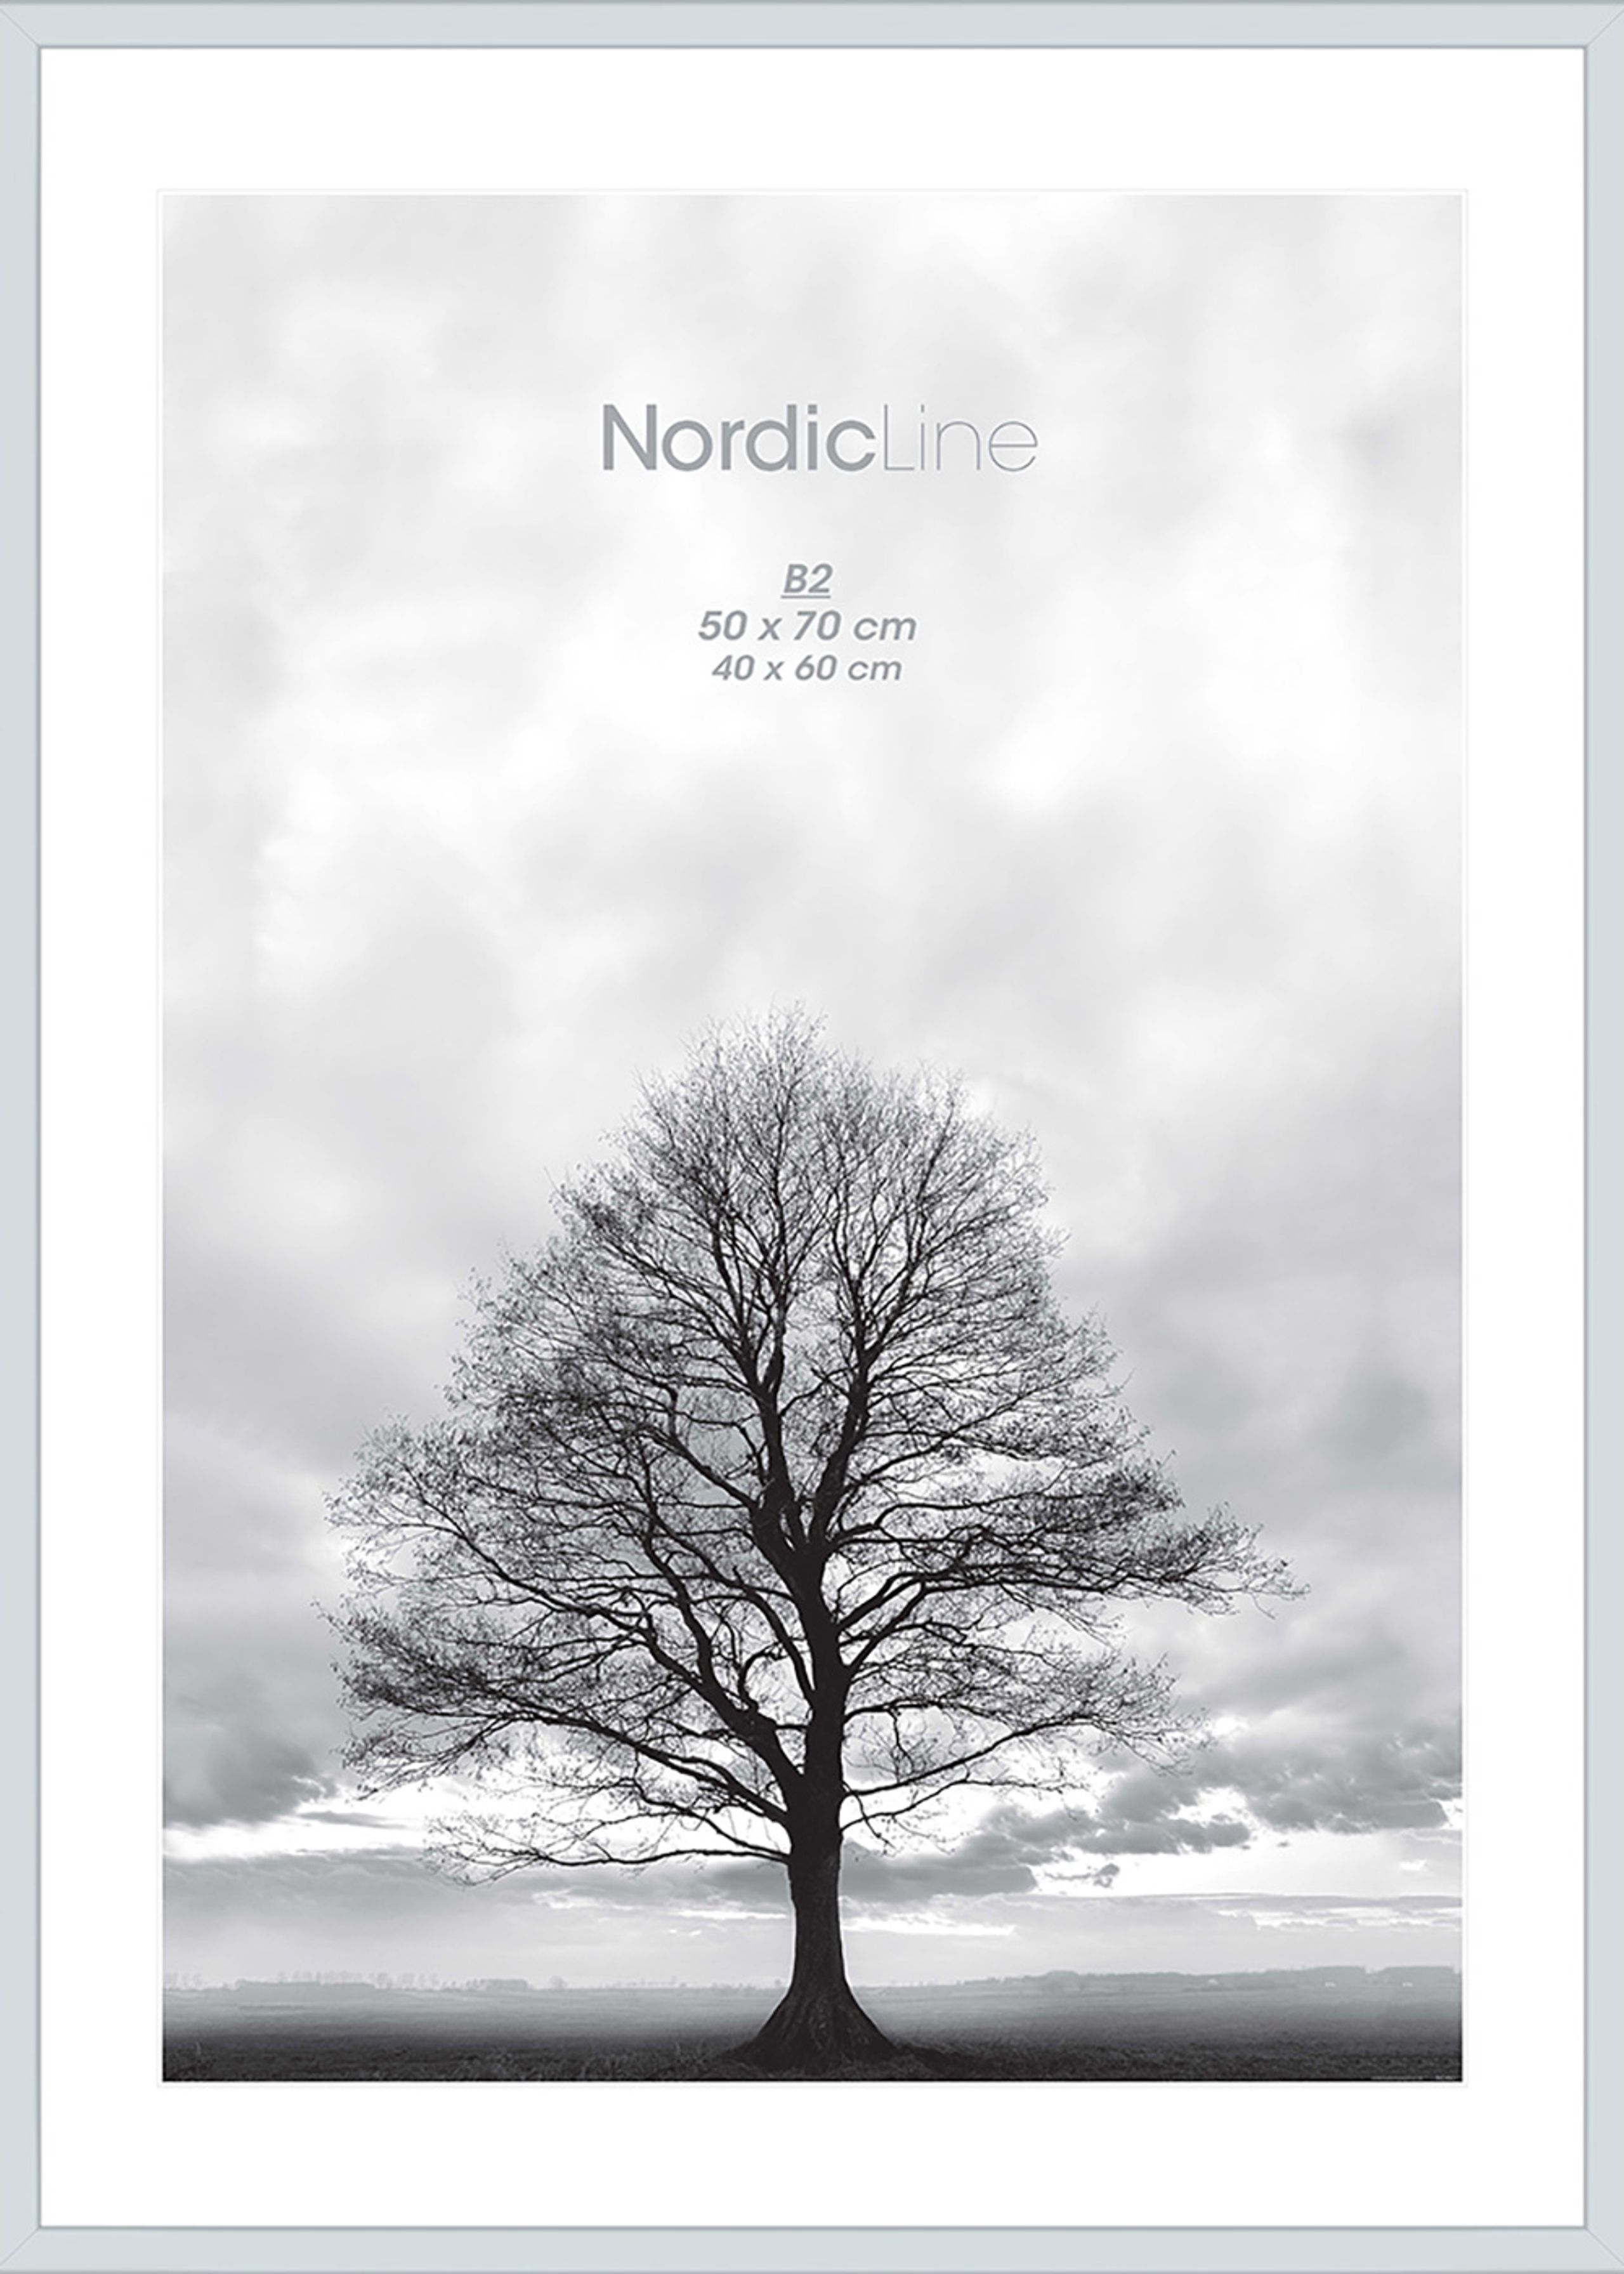 Nordic Line - Frames - Nordic Line frames - Atlantis - Atlantis